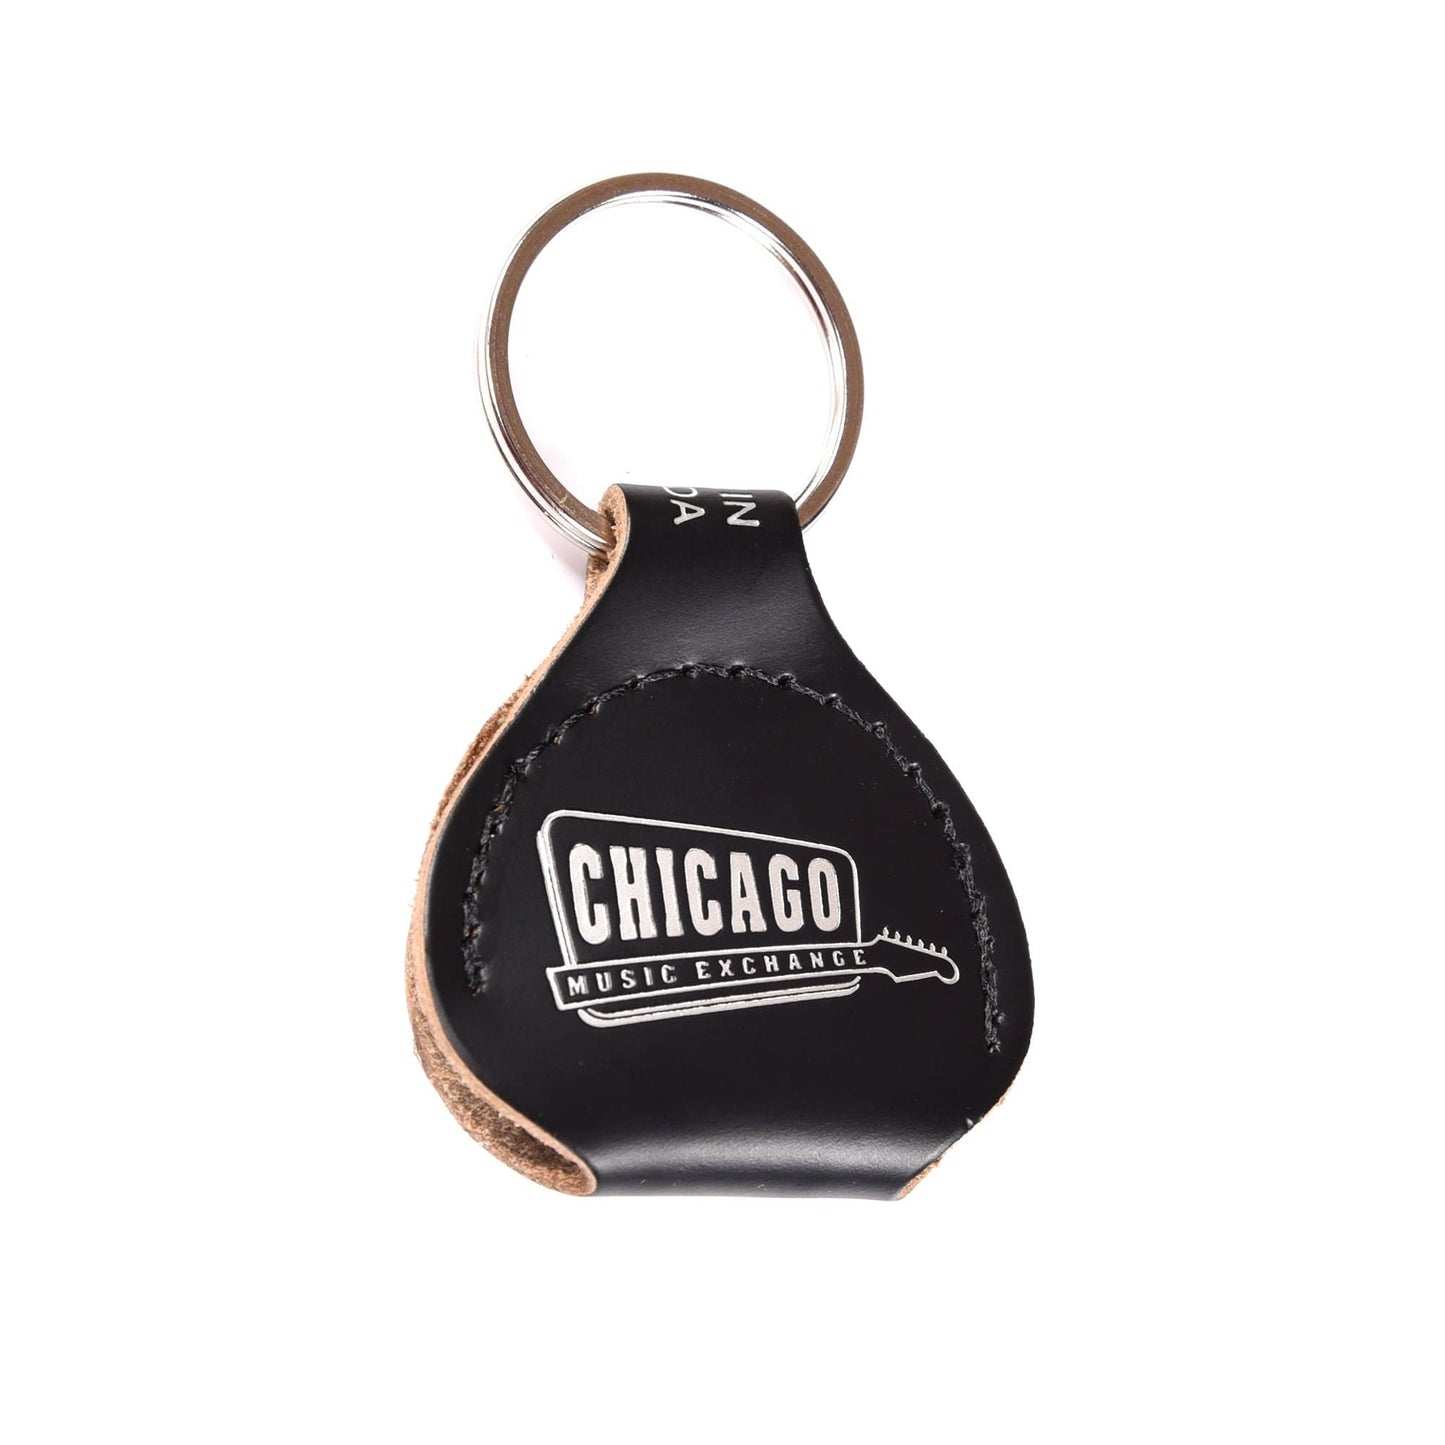 Chicago Music Exchange Leather Pick Holder Keychain Black w/Silver Foil Accessories / Merchandise